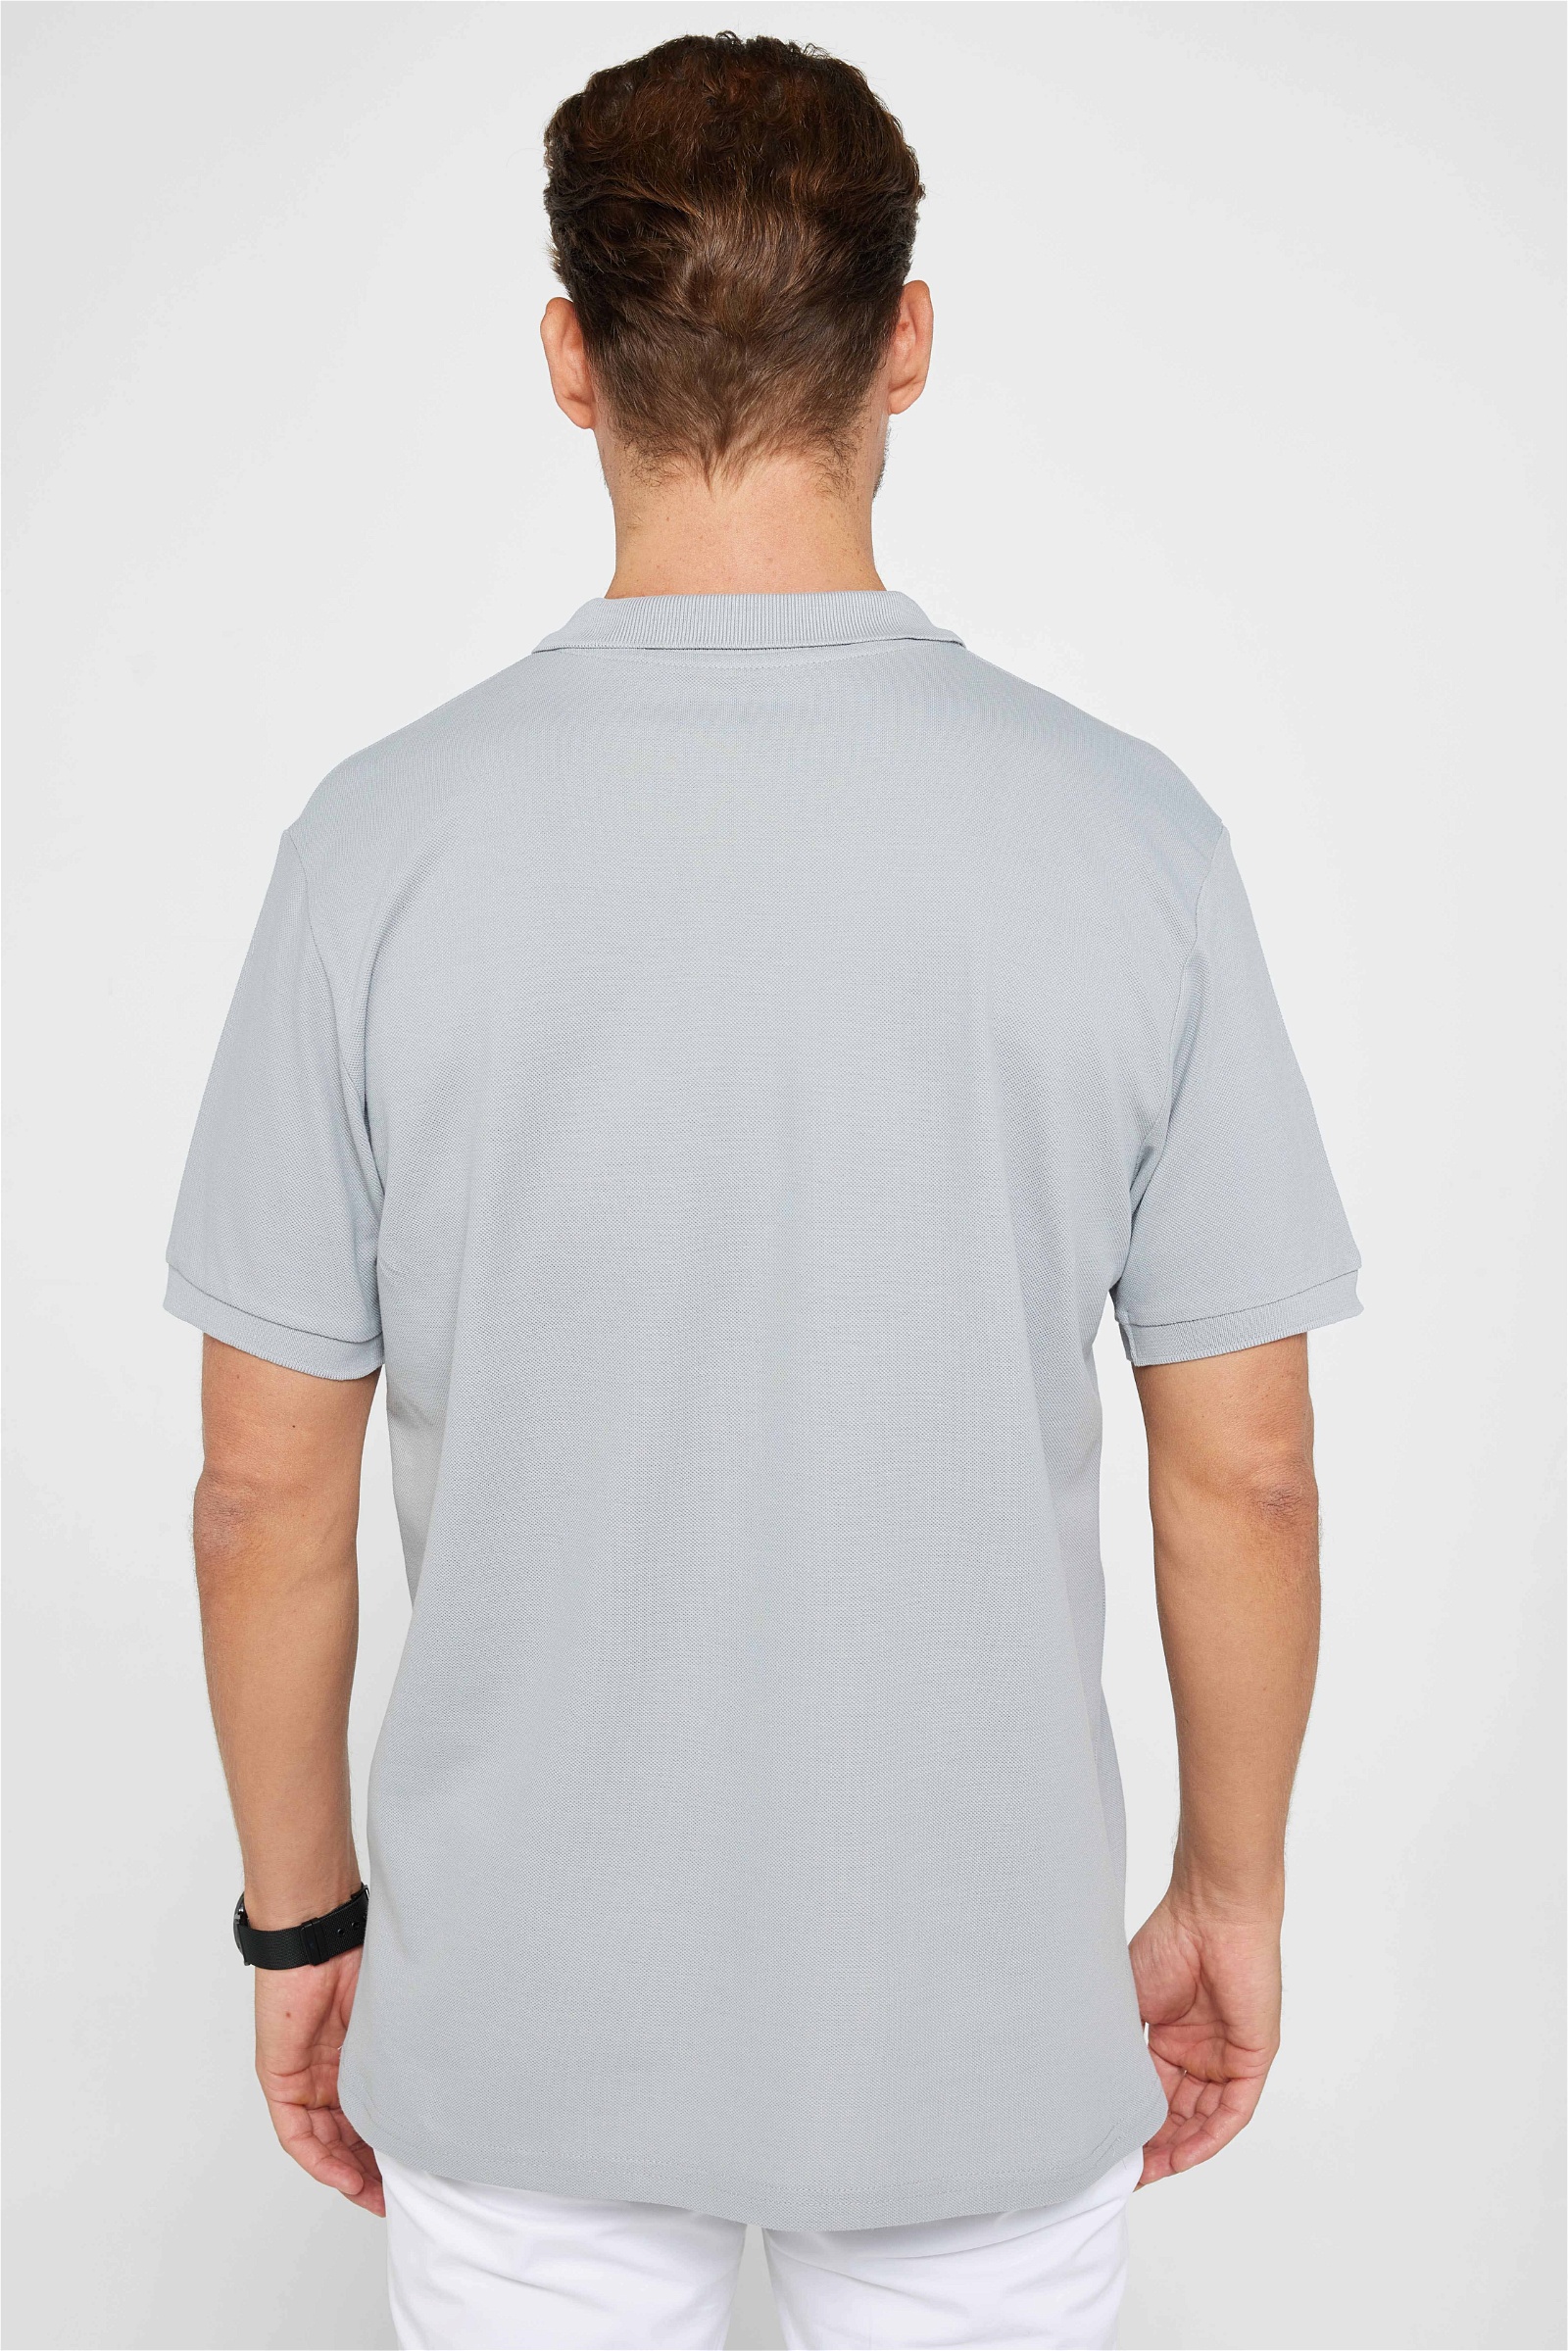 Classic Fit - Comfort Fit T-Shirt